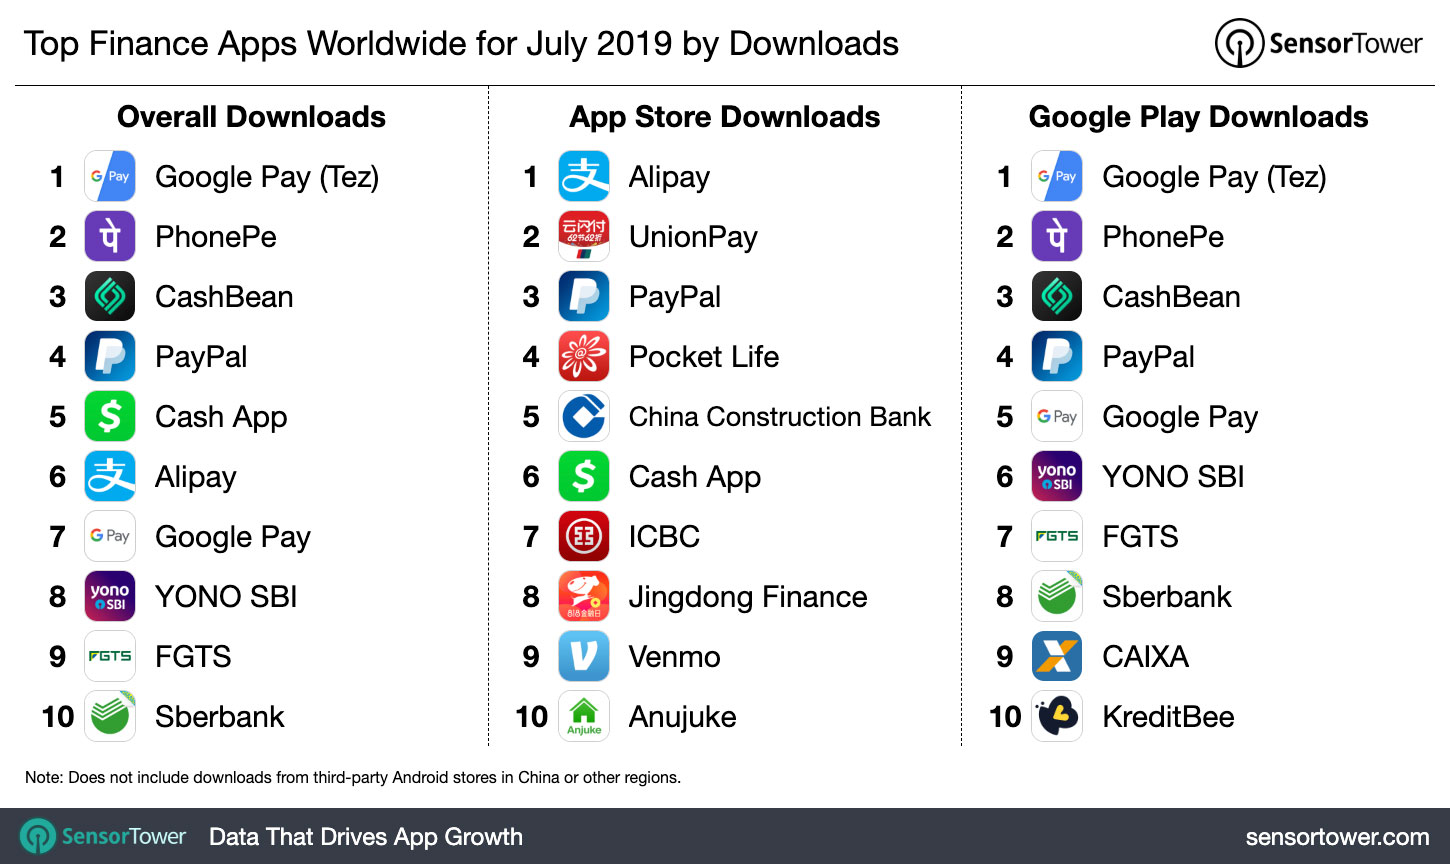 Top Finance Apps Worldwide for July 2019 by Downloads